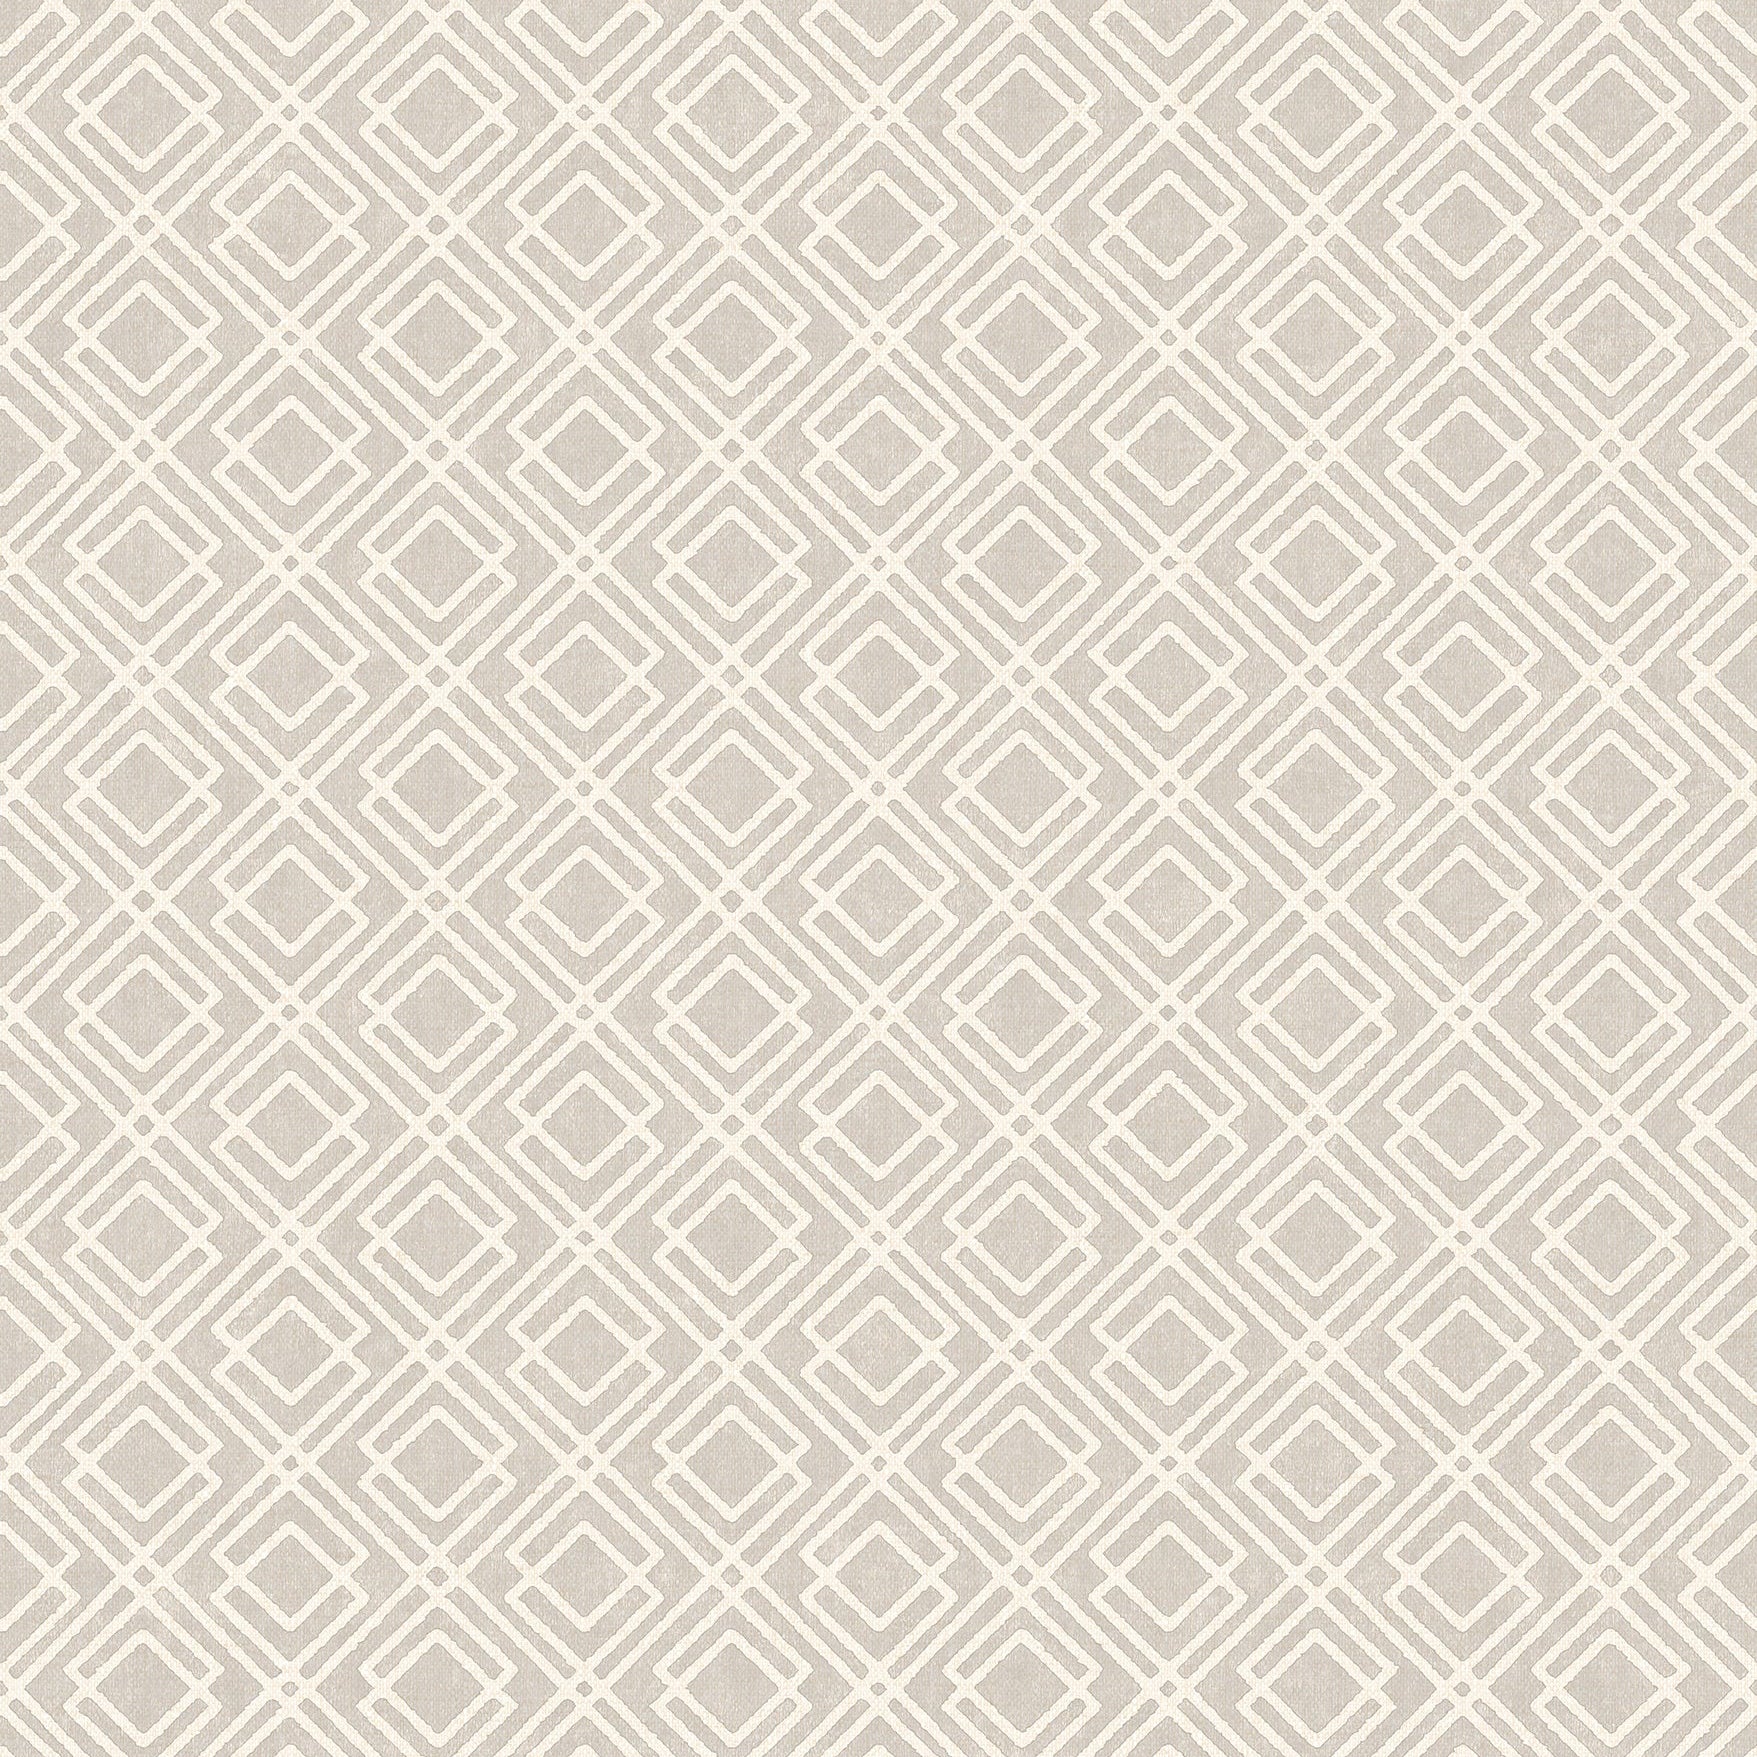 Order 2836-22022 Shades of Grey Browns Geometrics Wallpaper by Advantage